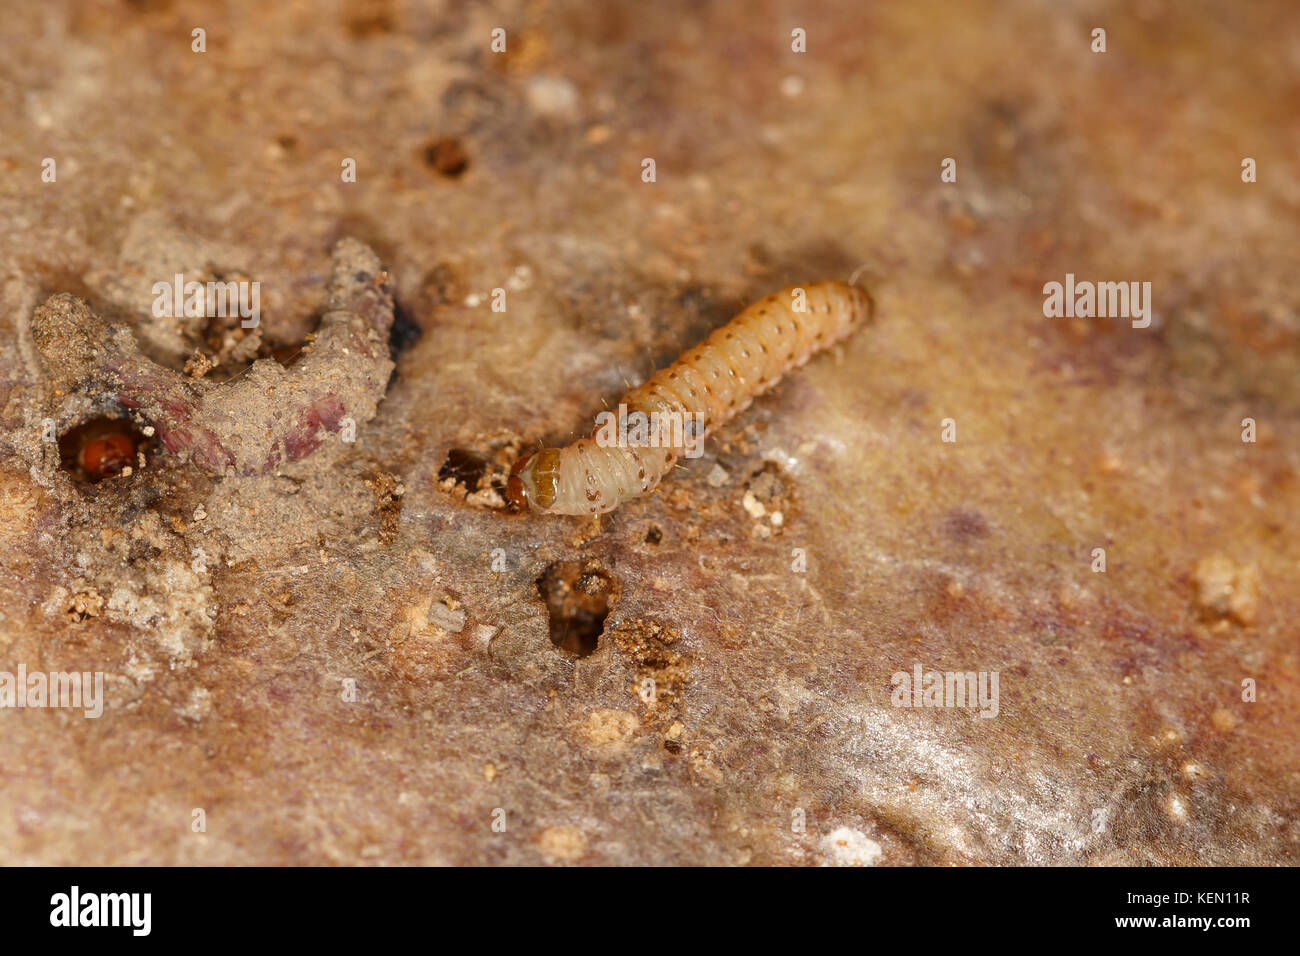 Larvae of Central American potato tuberworm (Guatemalan potato moth) Tecia solanivora (Povolny) on a potato tuber Stock Photo